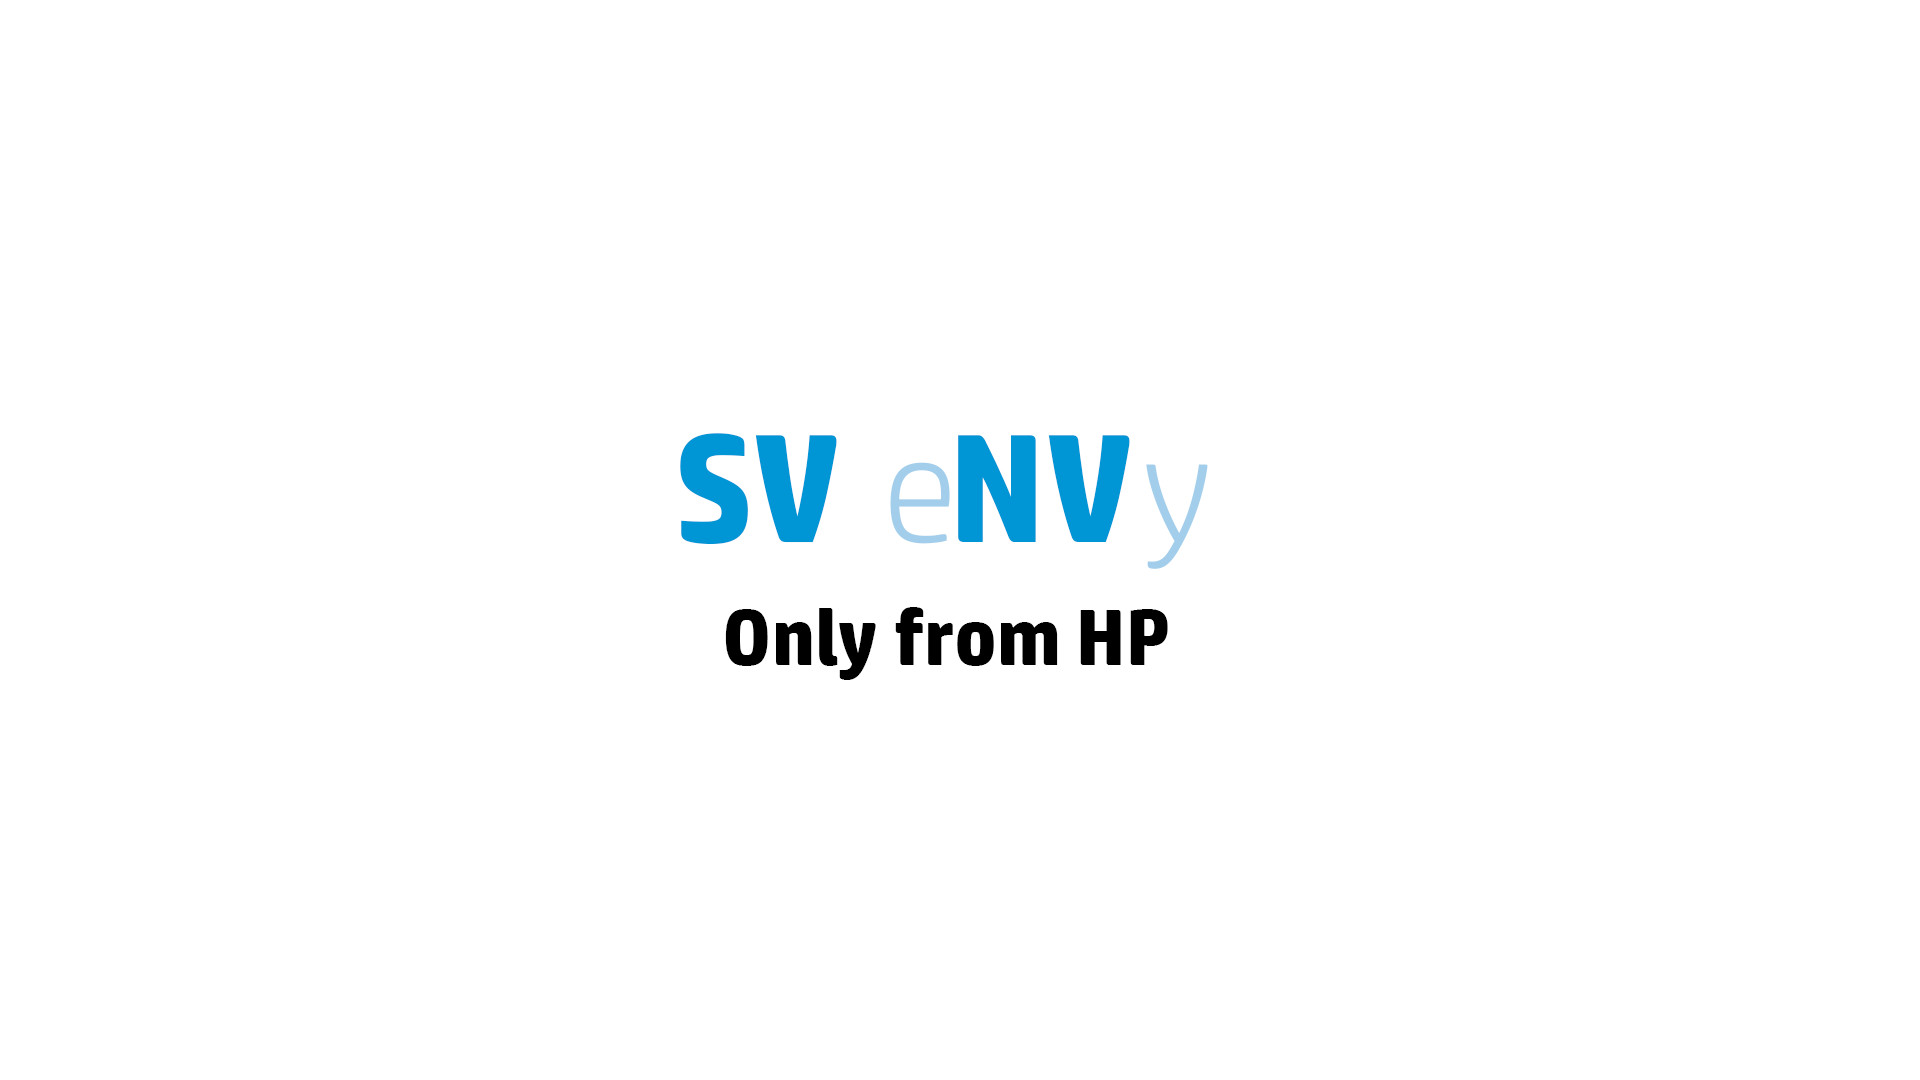 HP Software: Service Virtualization and Network Virtualization, SV eNVy